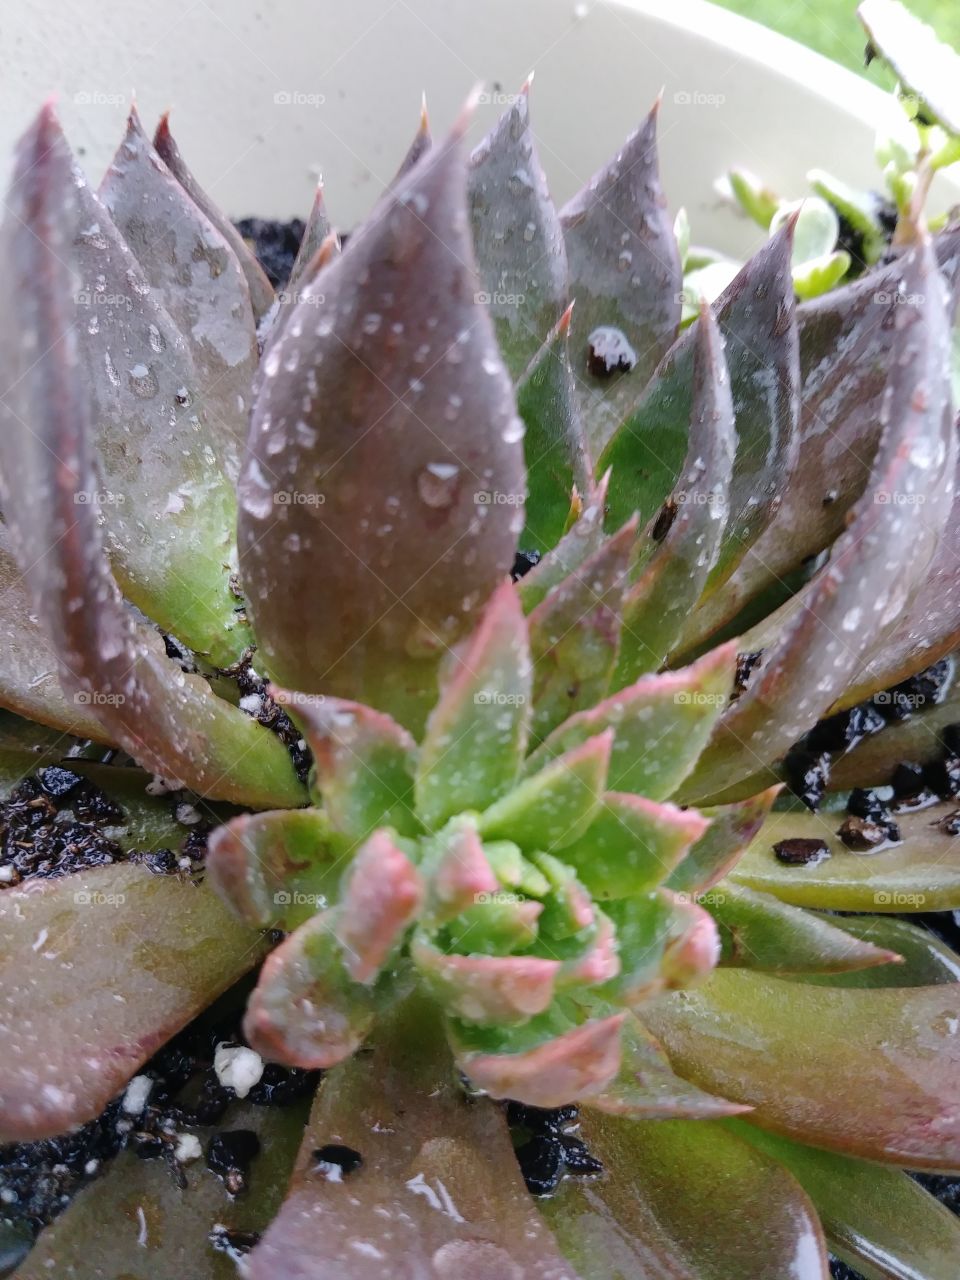 A happy little succulent enjoying a drink in the rain.